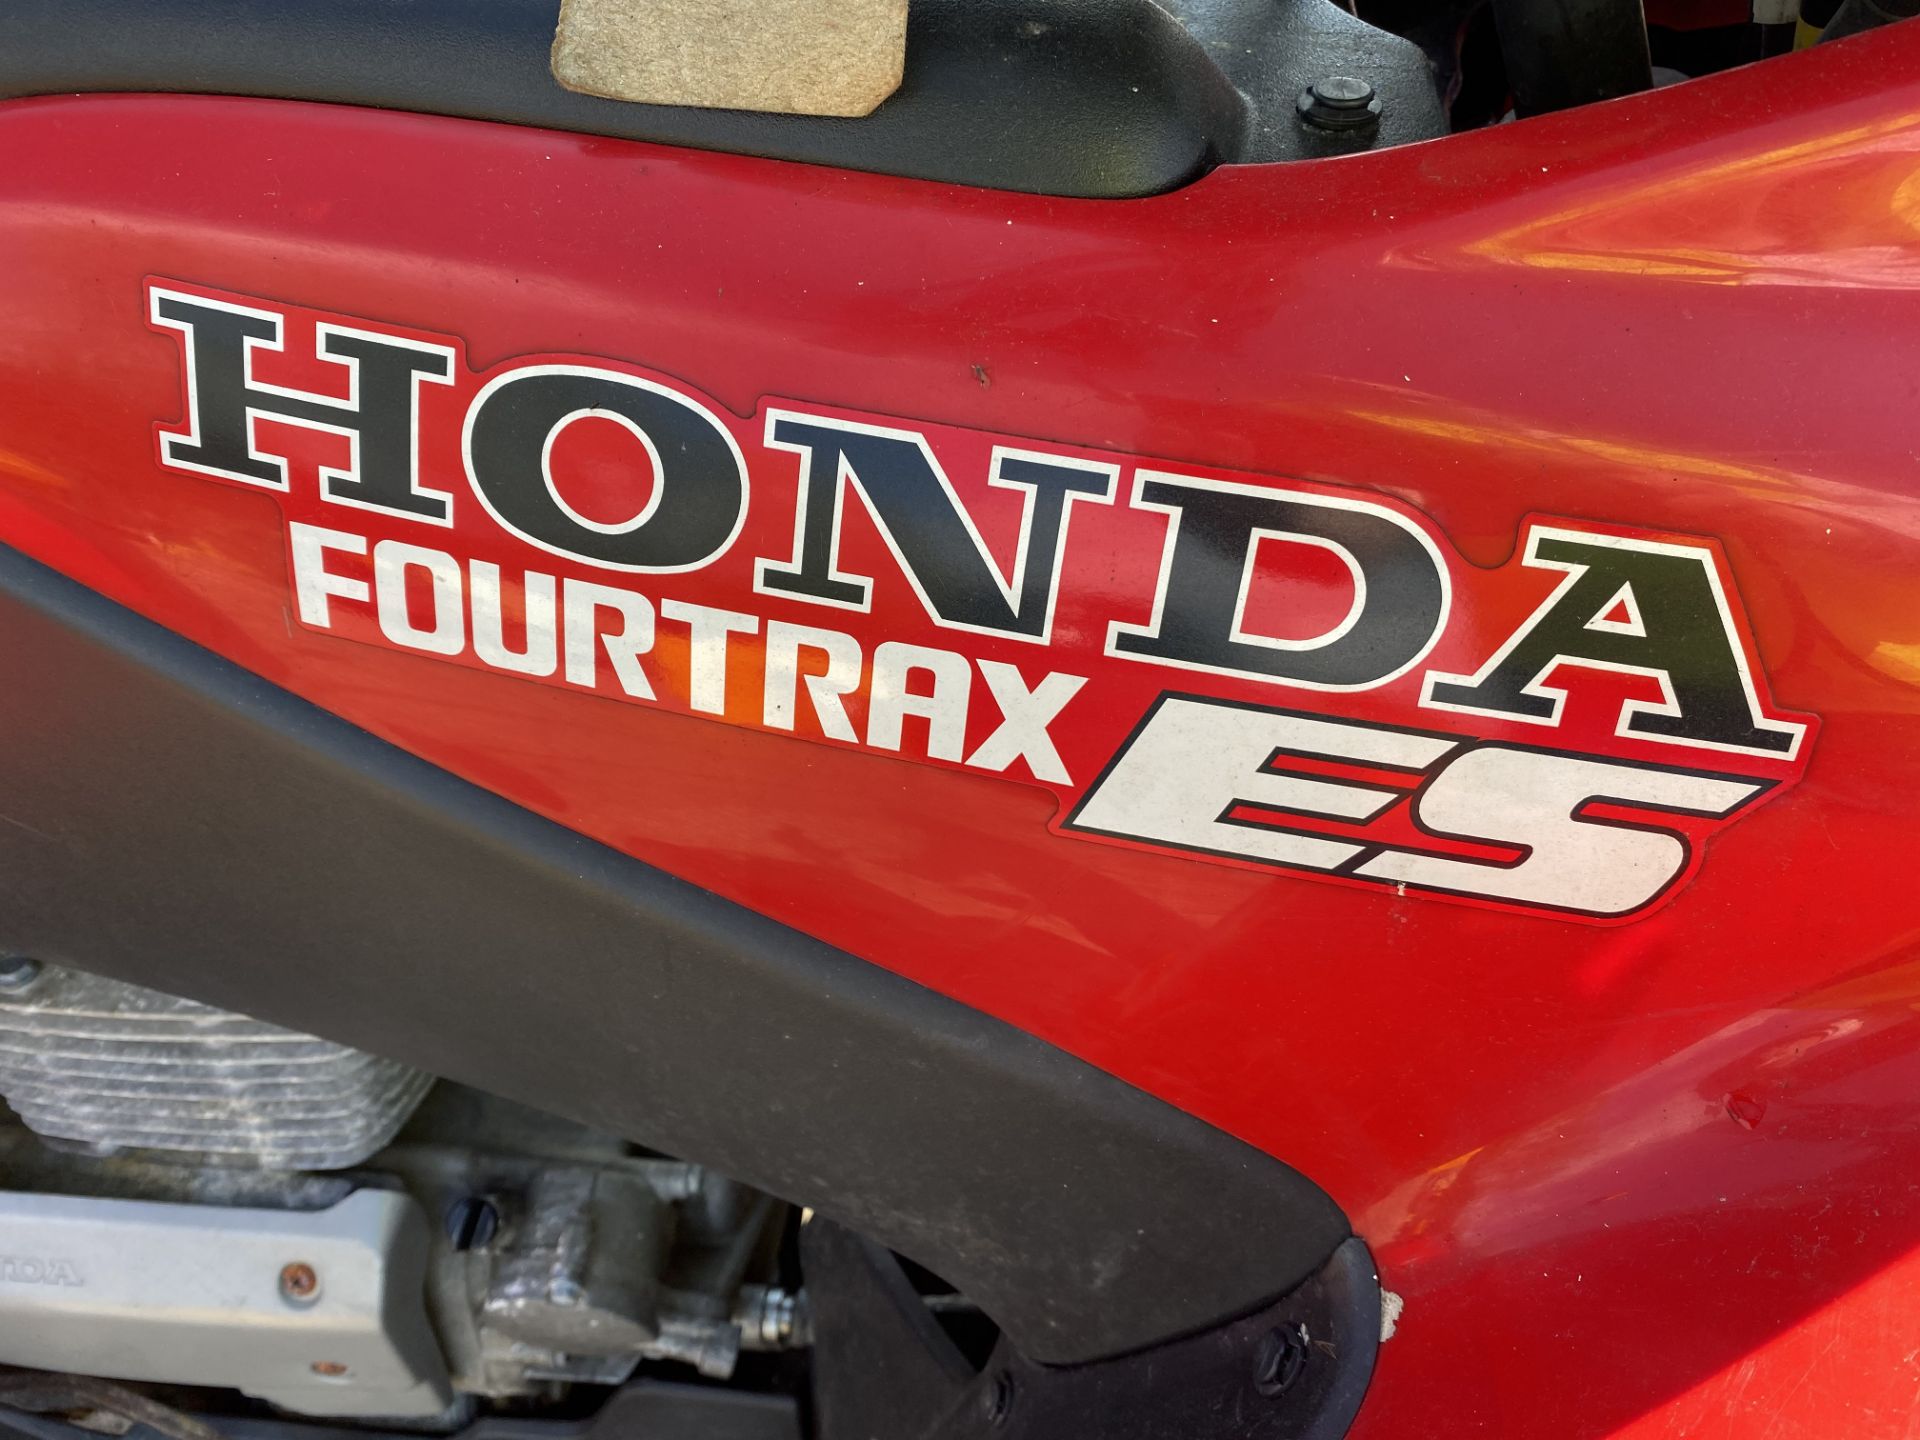 Honda Fourtrax ES TRX350TE 4x4 petrol 14.3 Kw quad bike, 2335 recorded Km fitted with Logic snow - Image 2 of 3